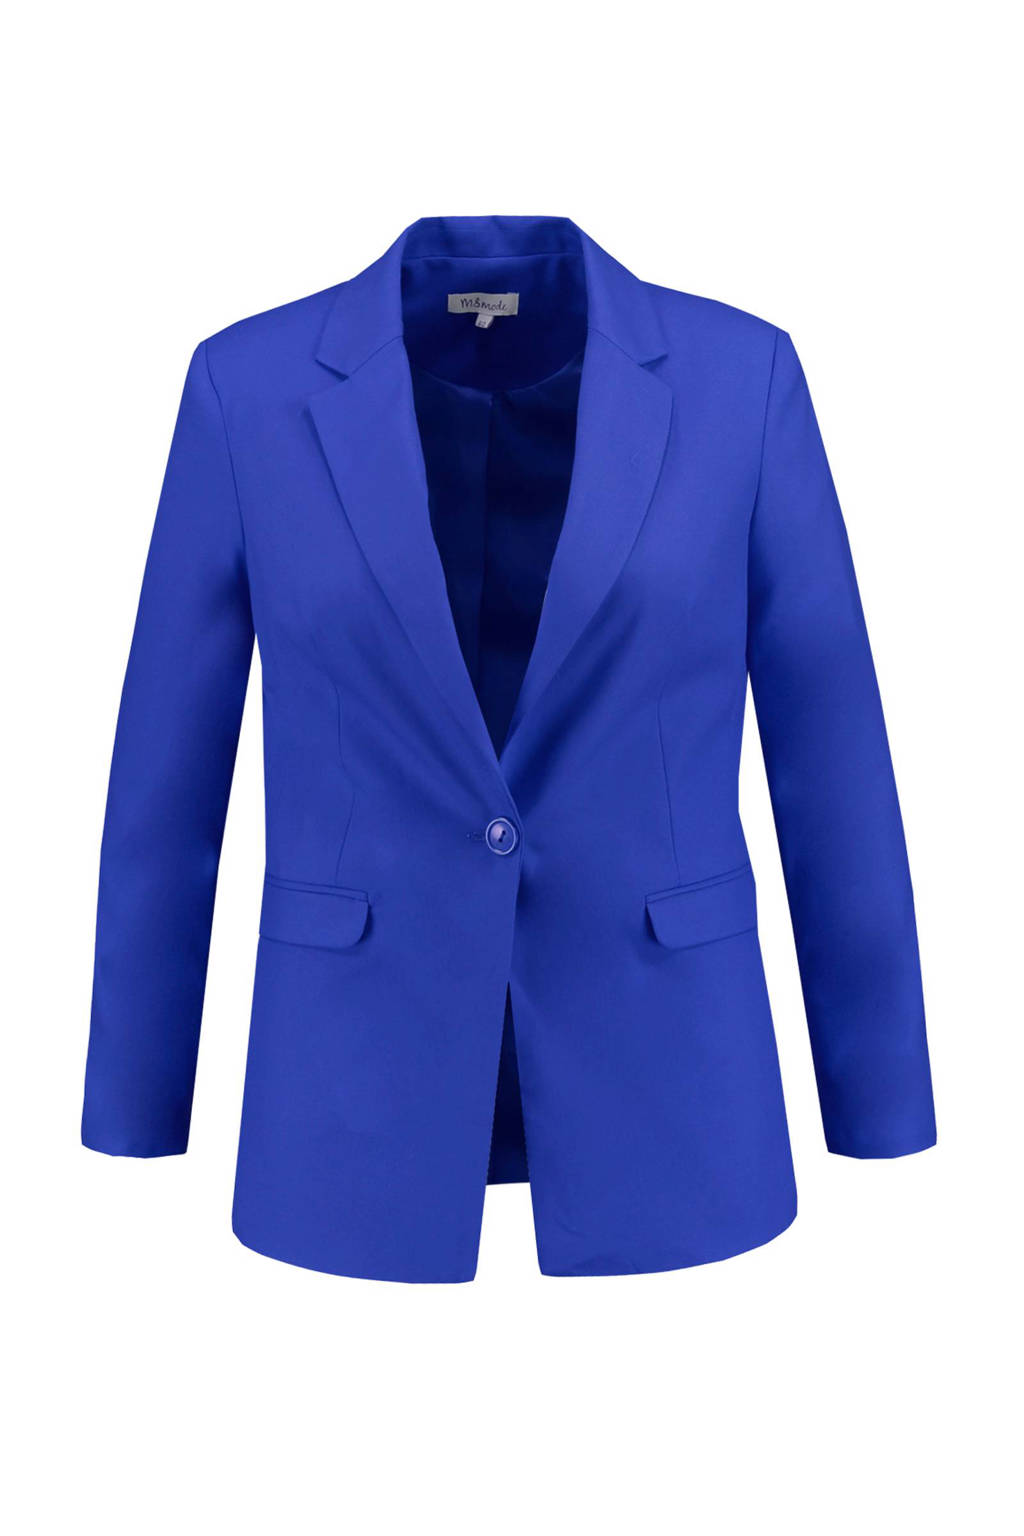 Belofte Vertrouwelijk plaag MS Mode blazer kobaltblauw | wehkamp